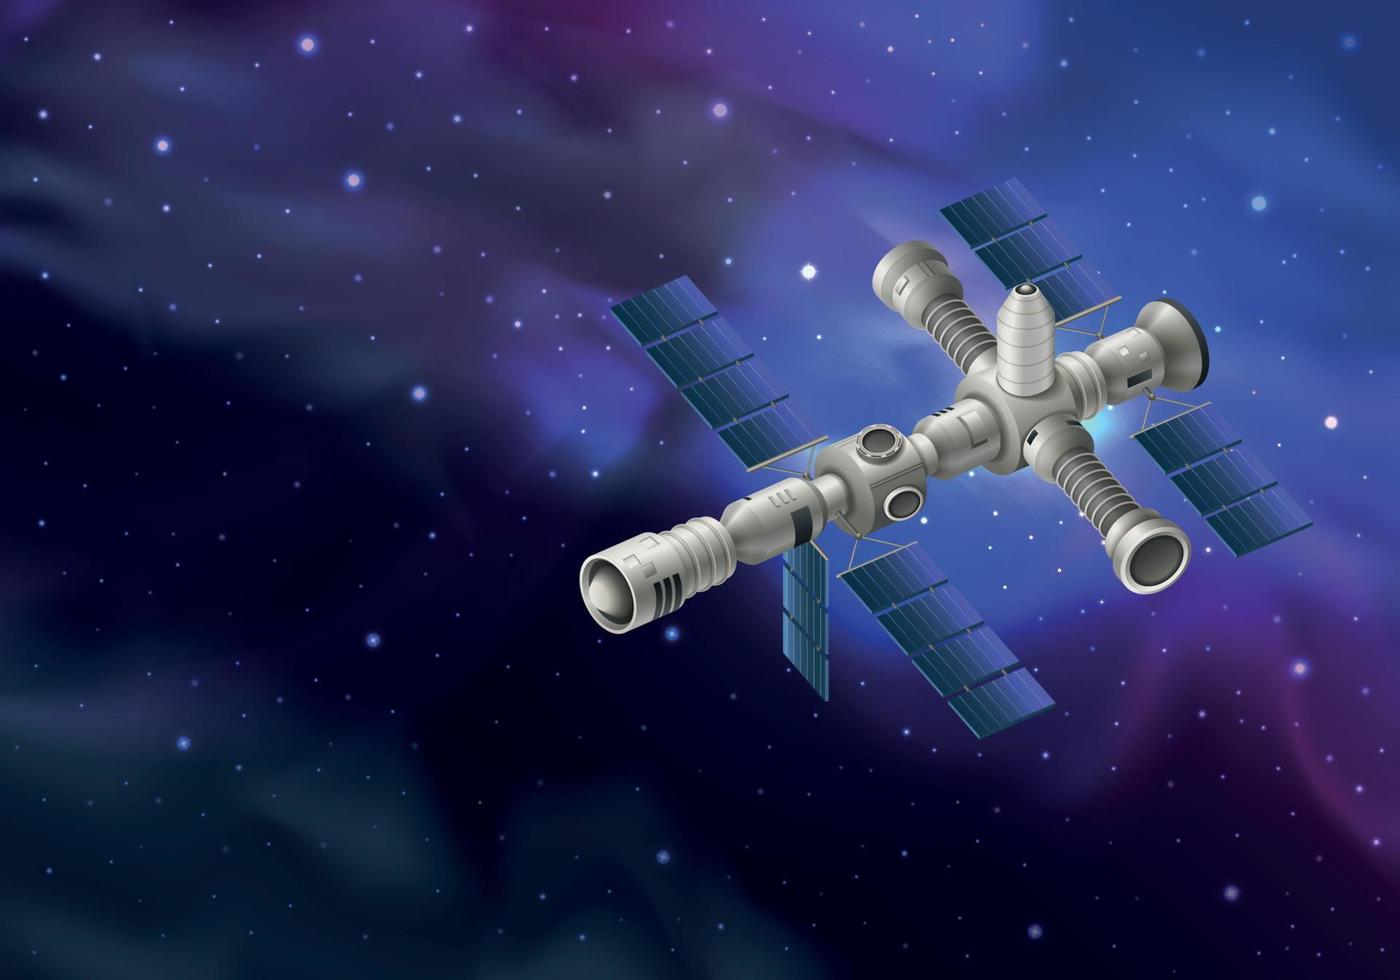 Realistic Spacecraft Illustration vector